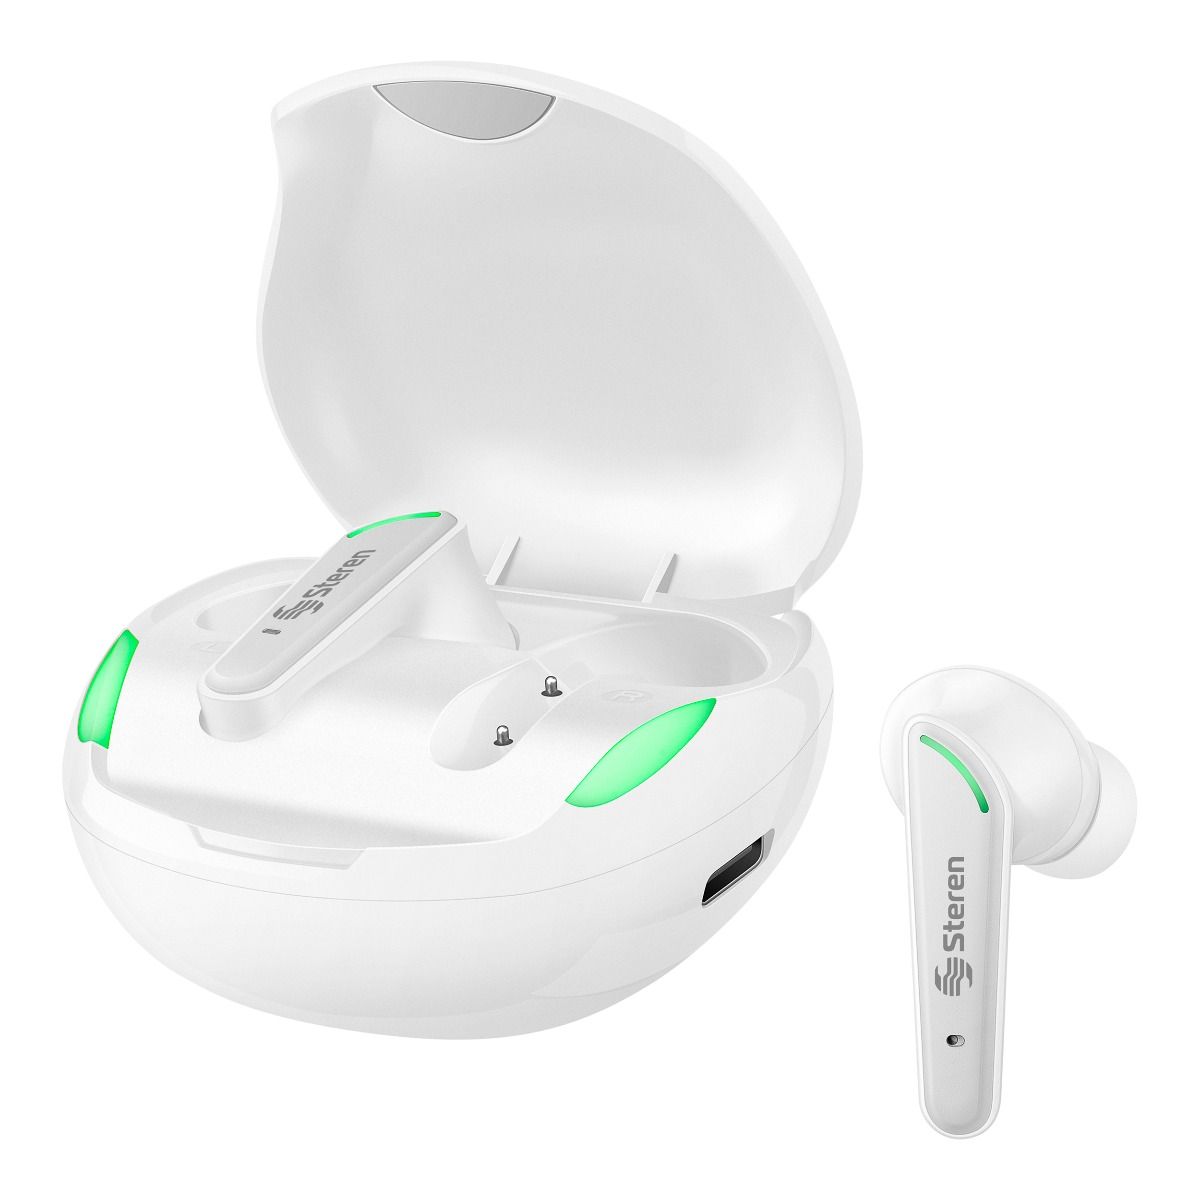 Review: Votones Auriculares inalambricos Bluetooth para Niña 